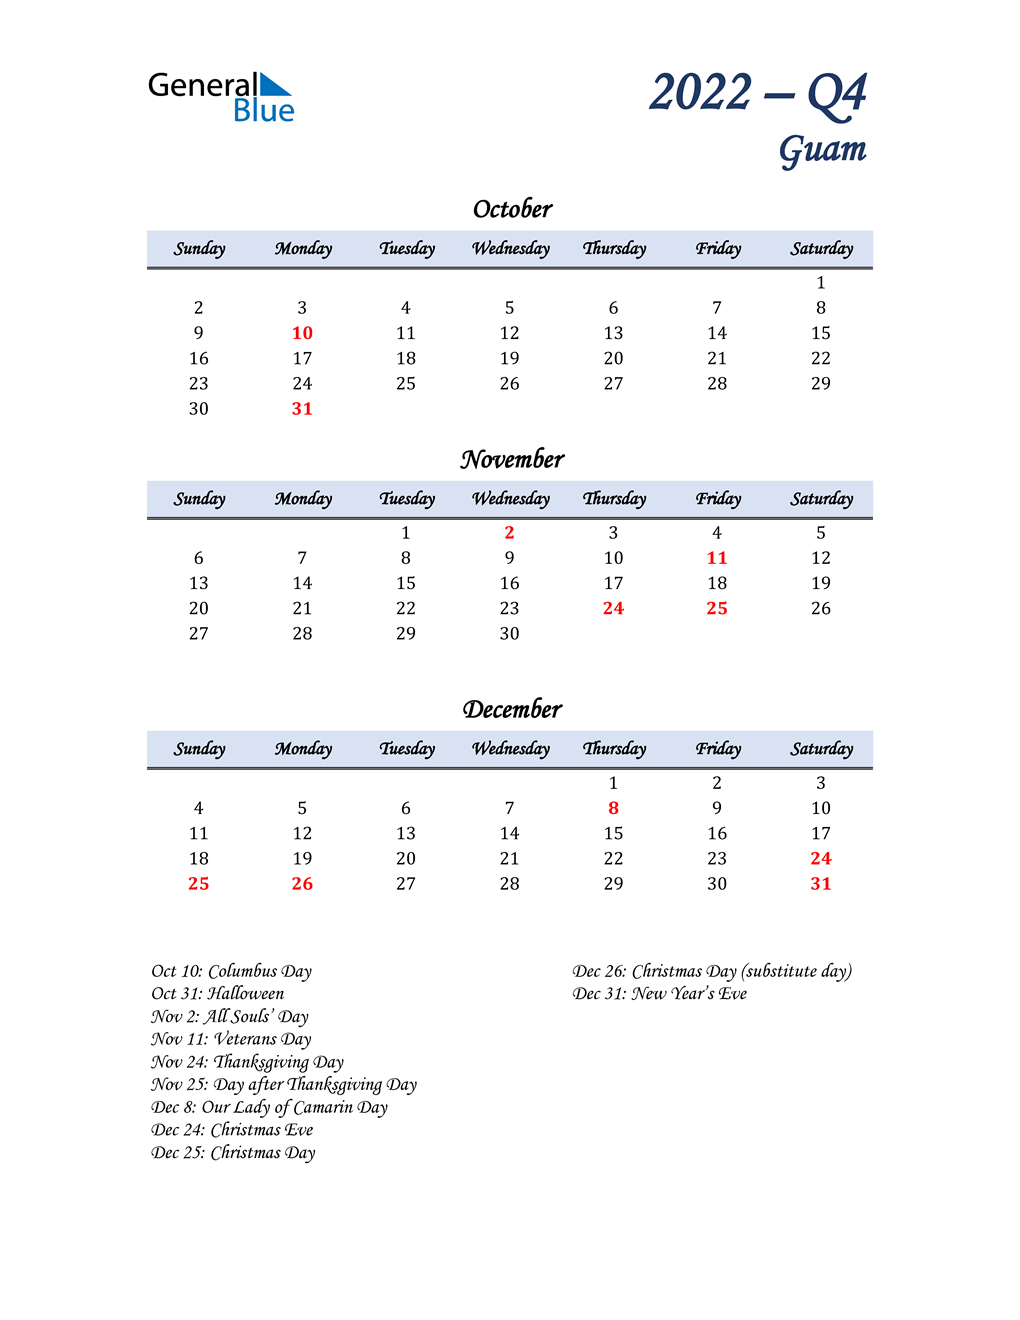  October, November, and December Calendar for Guam